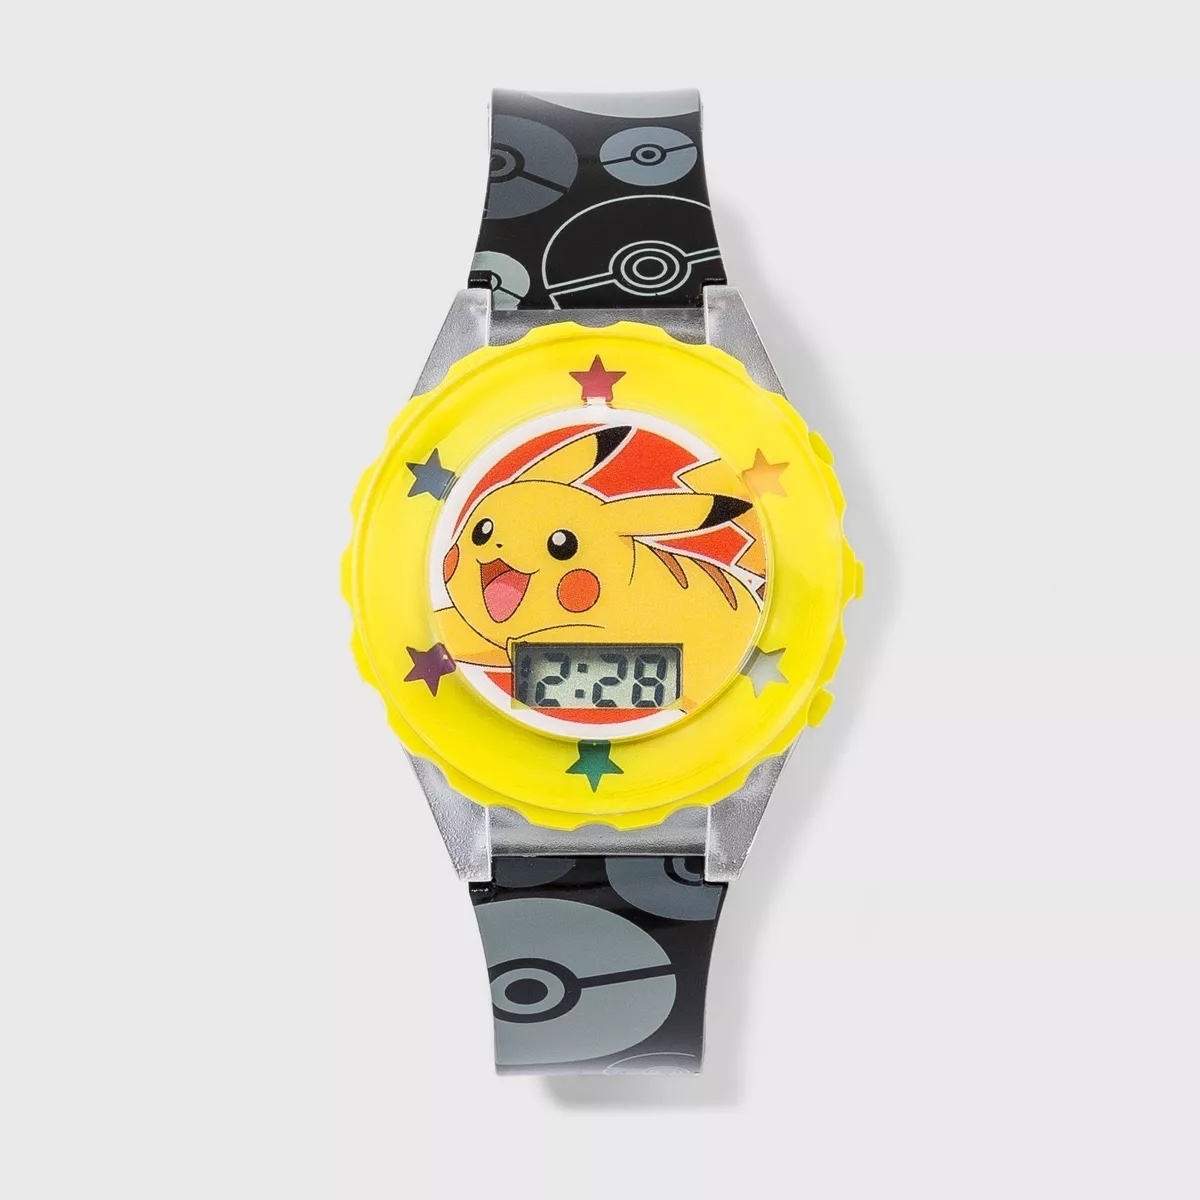 the yellow pokemon watch